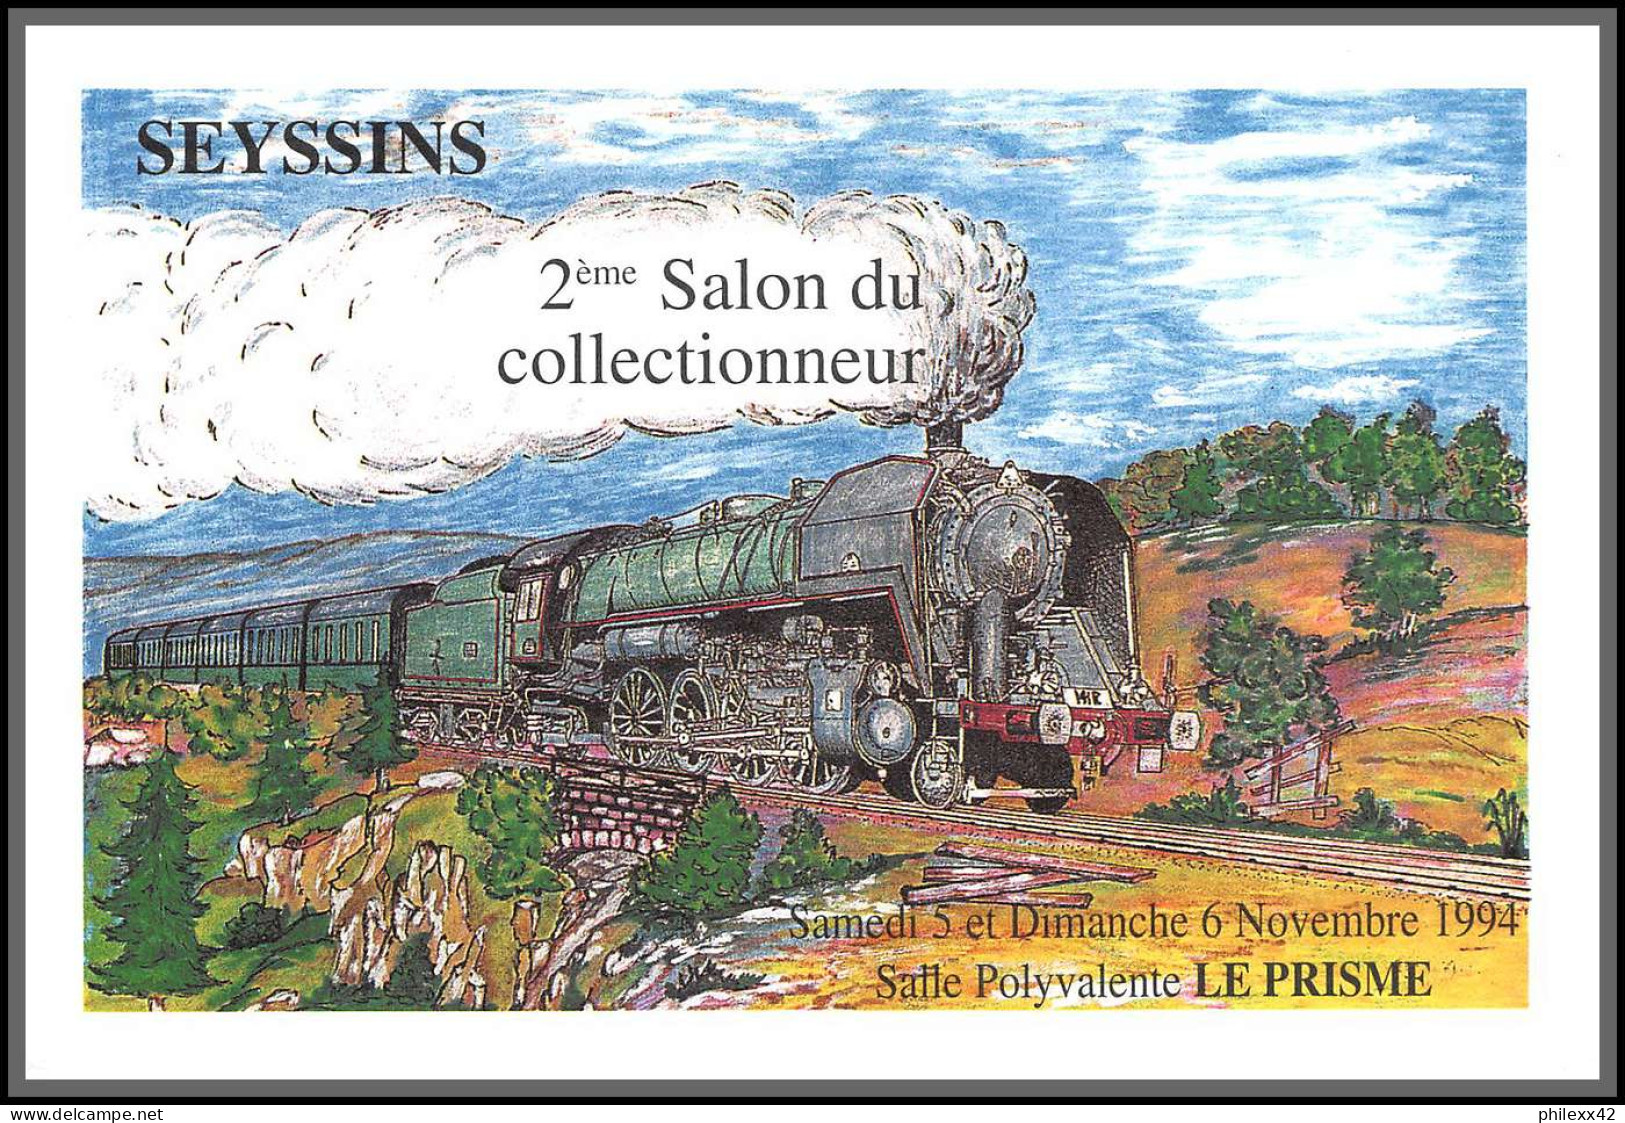 74241 Mixte Atm Briat 4/3/1997 M'tsangamouji Mayotte Echirolles Isère France Carte Postcard Colonies - Briefe U. Dokumente